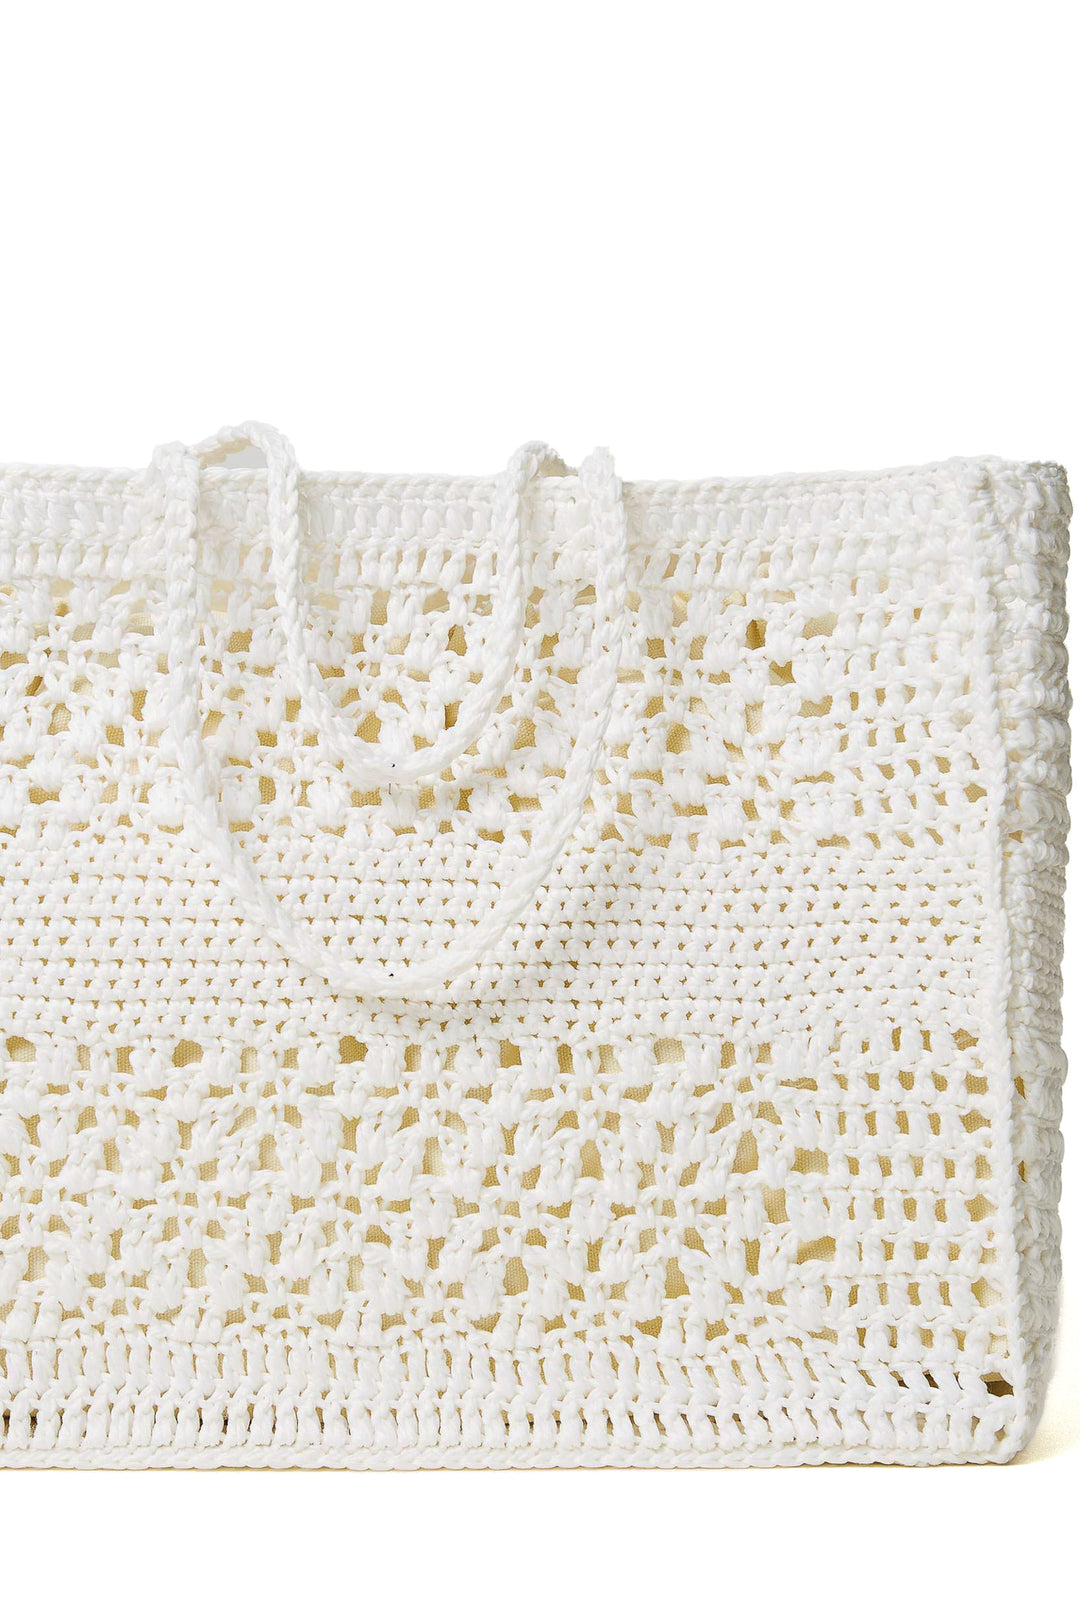 TWINSET Borsa shopper 'Bohémien' crochet bianco neve - Mancinelli 1954